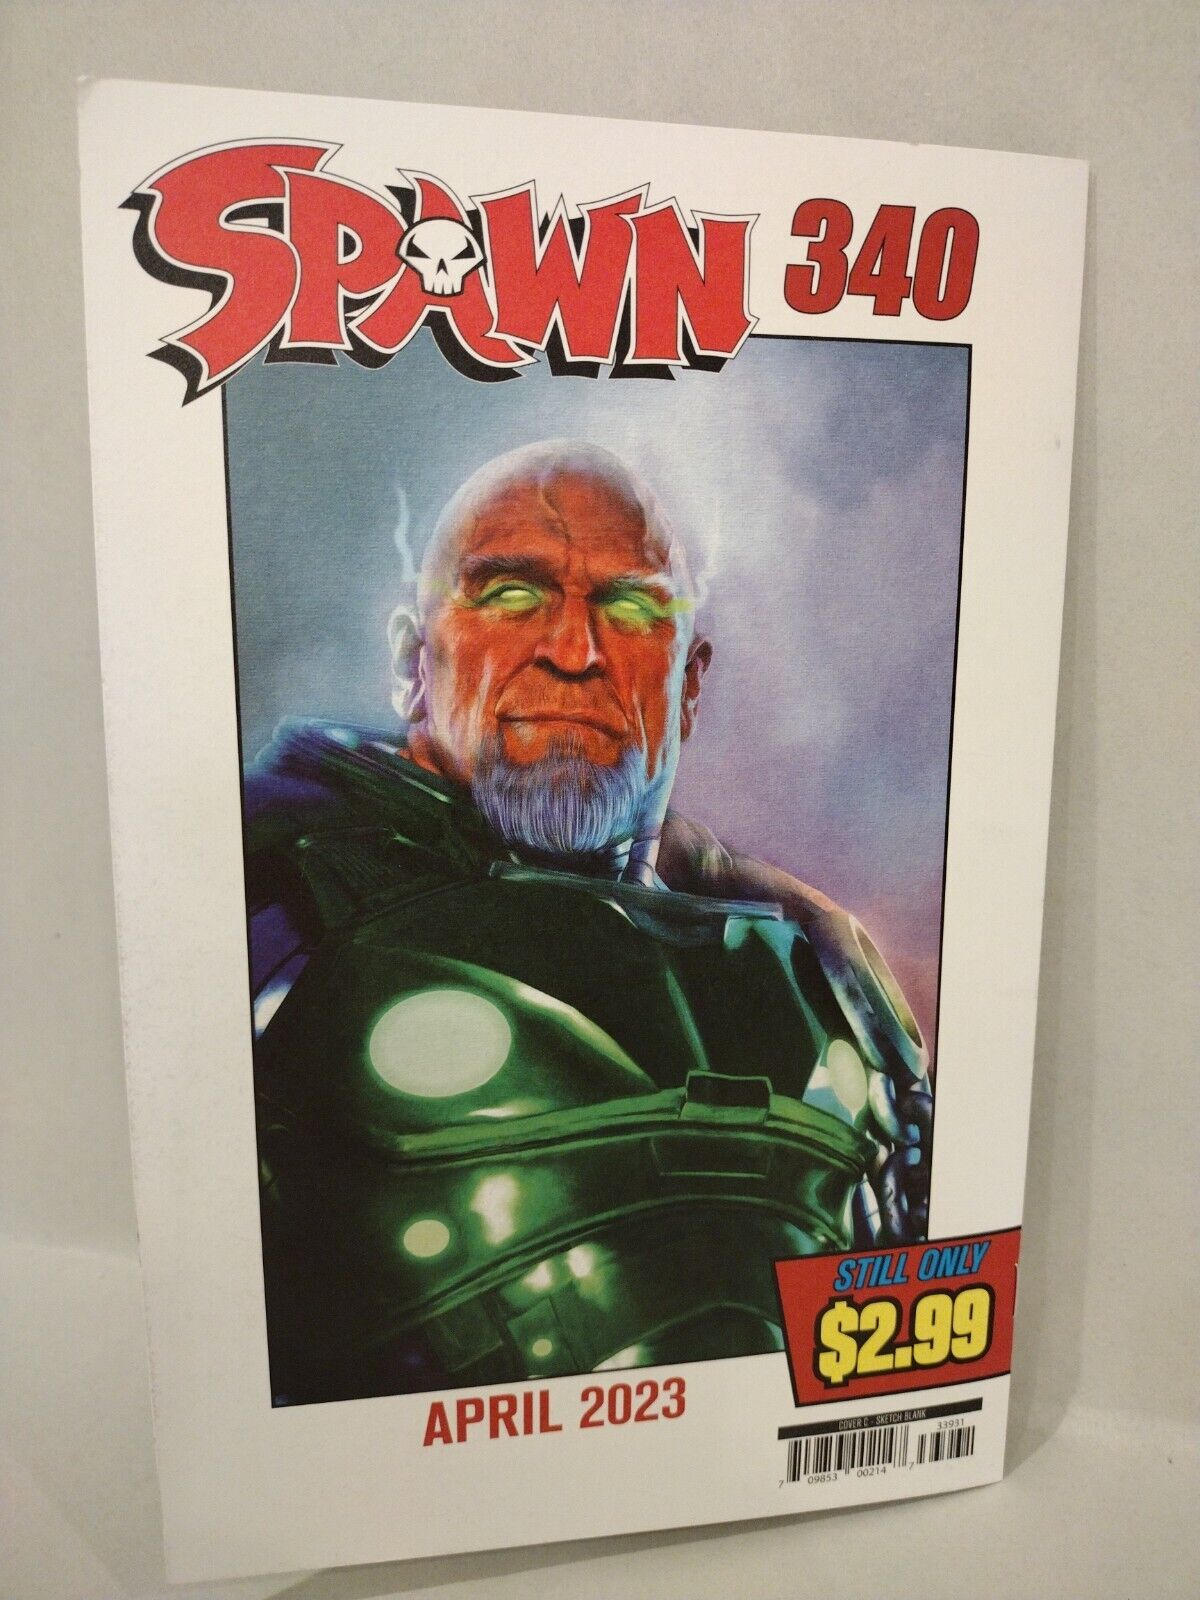 Spawn 339 (2023) Image Comic Blank Cover Variant w Original Dave Castr Art